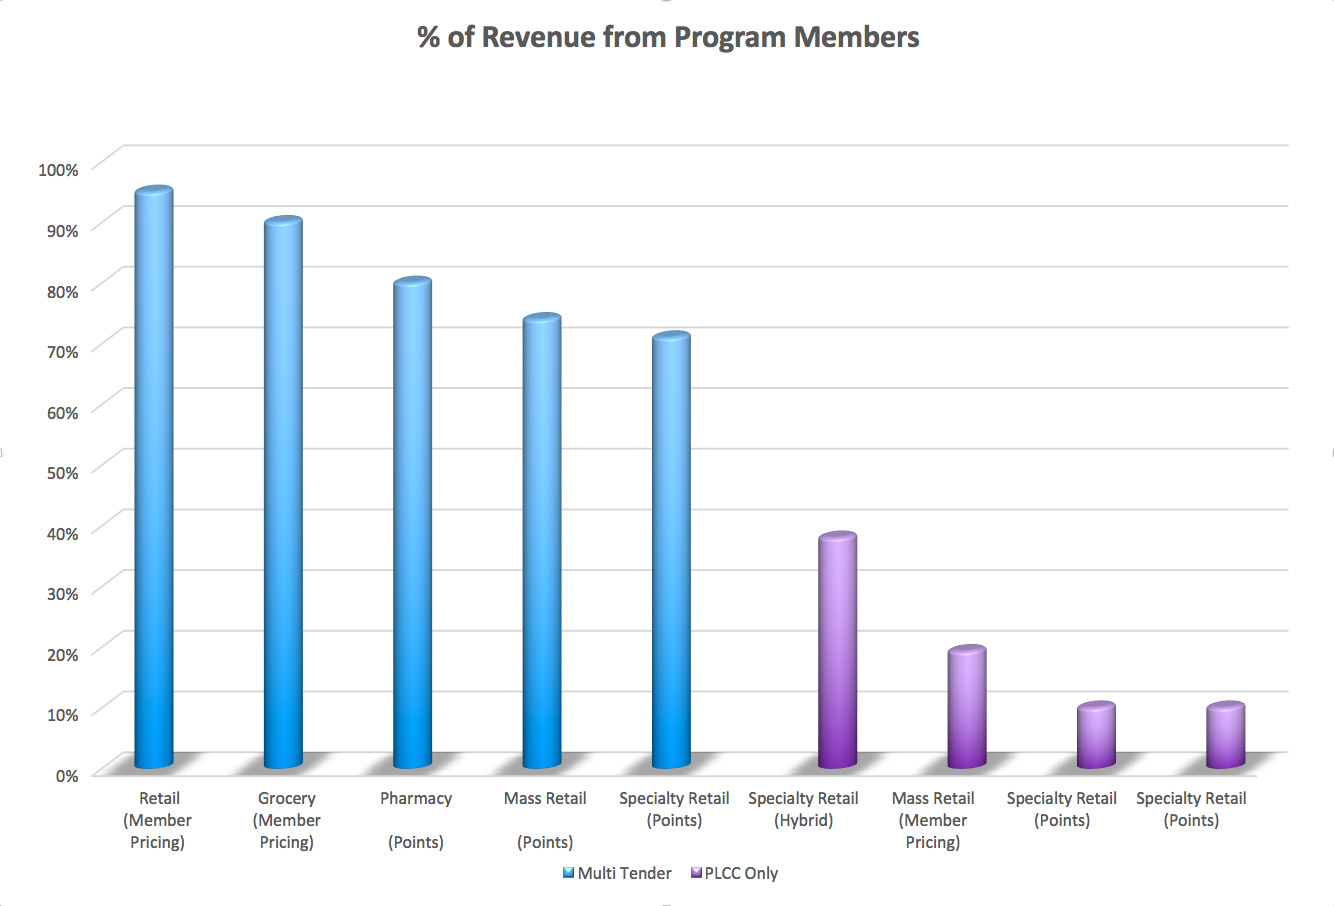 Revenue from Program members